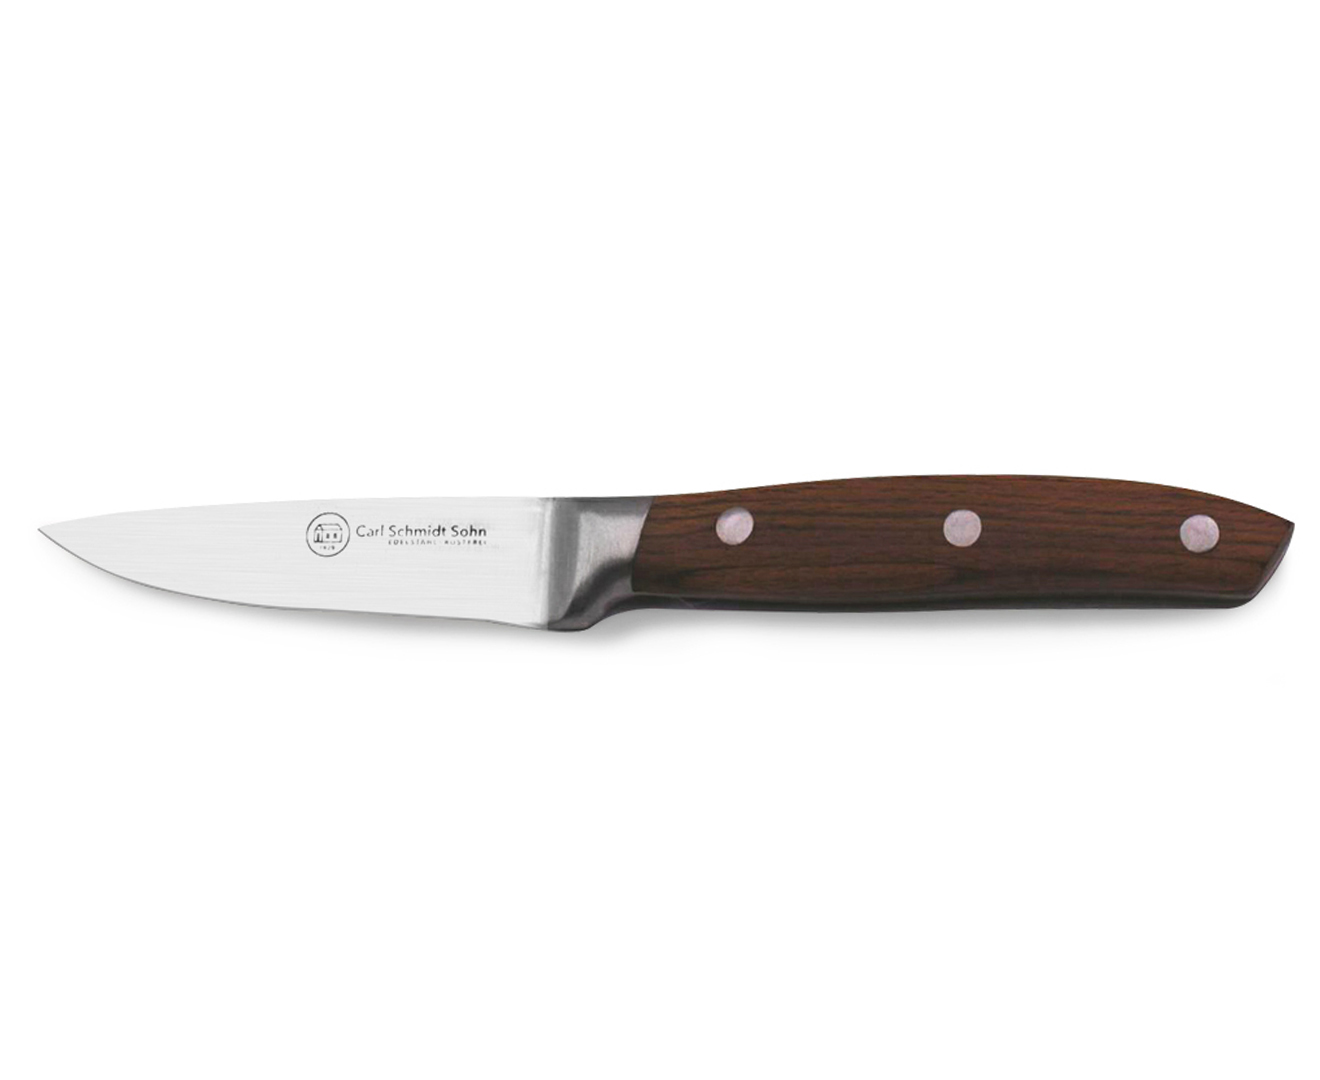 Carl Schmidt Sohn 6pcs Knife set with Wooden Knife Block